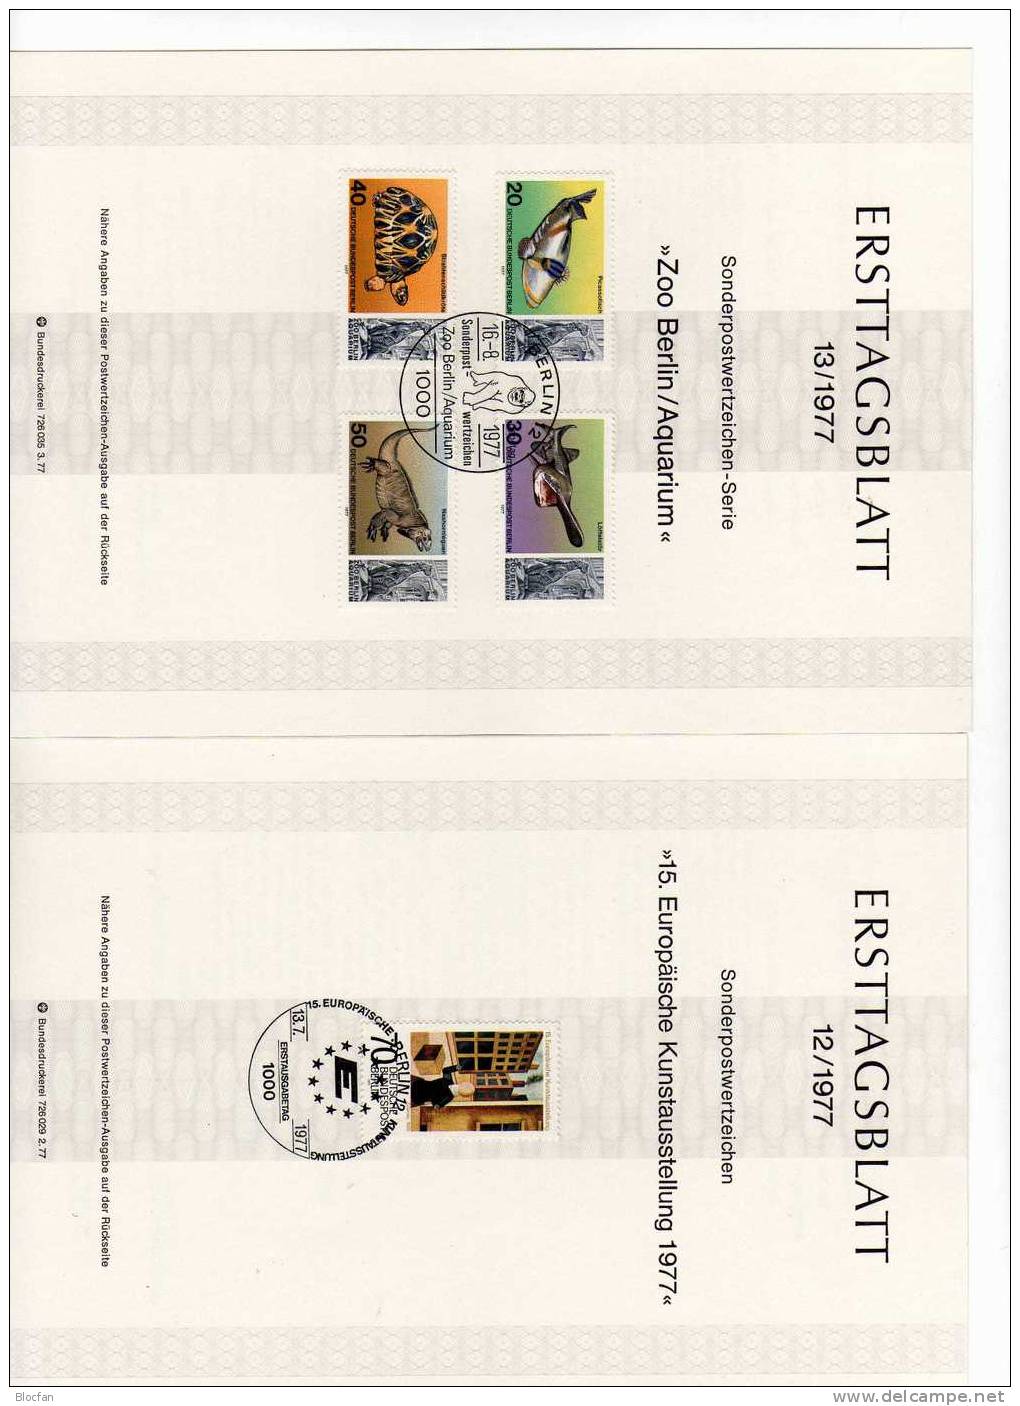 ETB III. Quartal 1977 Funkturm Patente Kunst Zoo Berlin 549-555 SST 5€ Berliner Ersttagsblatt Document From Germany - Lettres & Documents